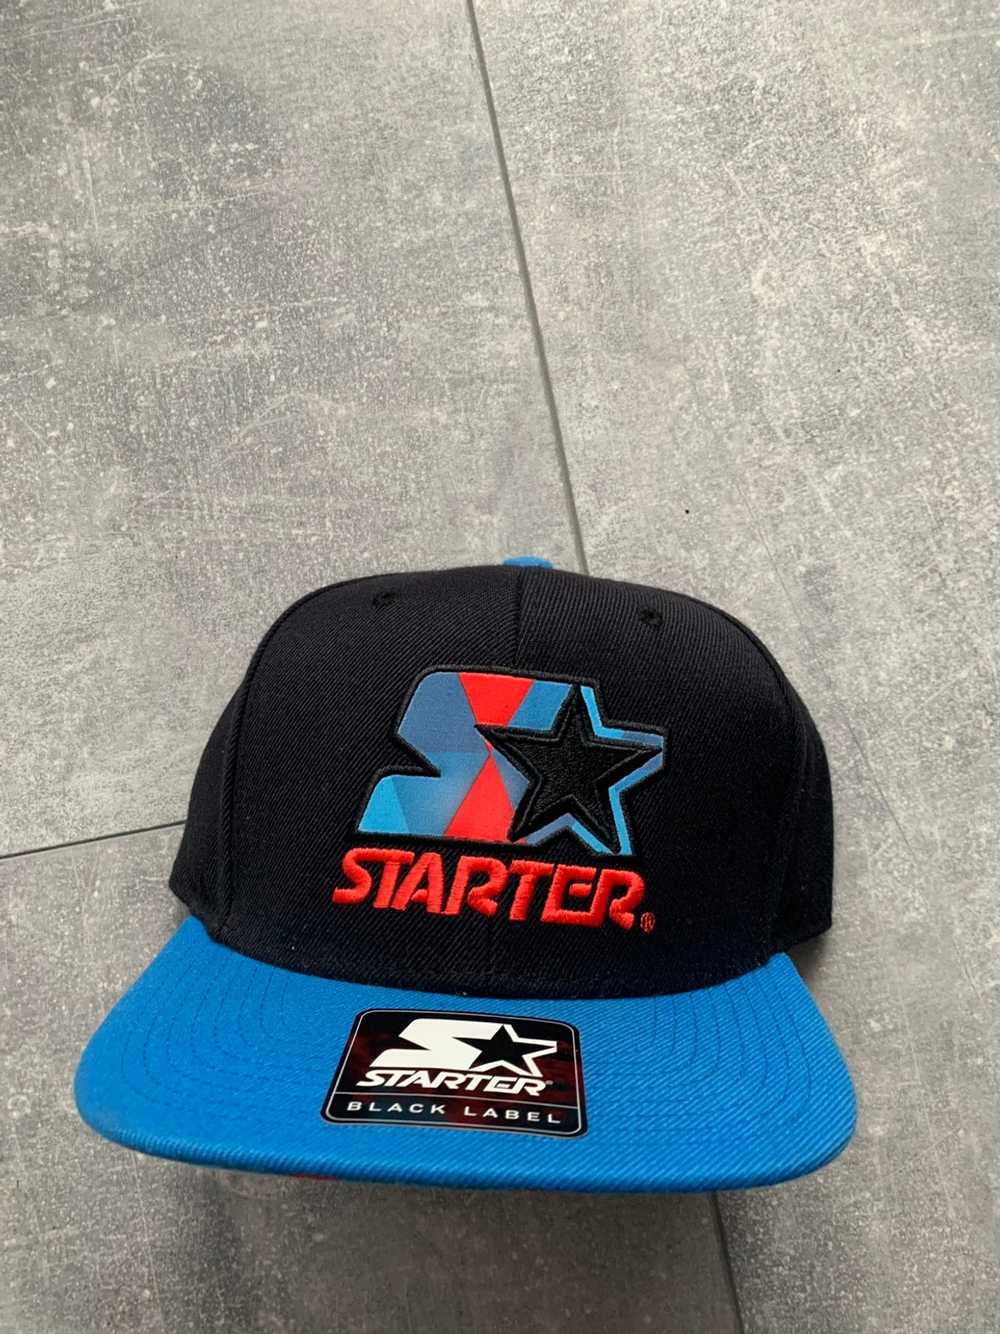 label Starter Gem Starter - Black cap new